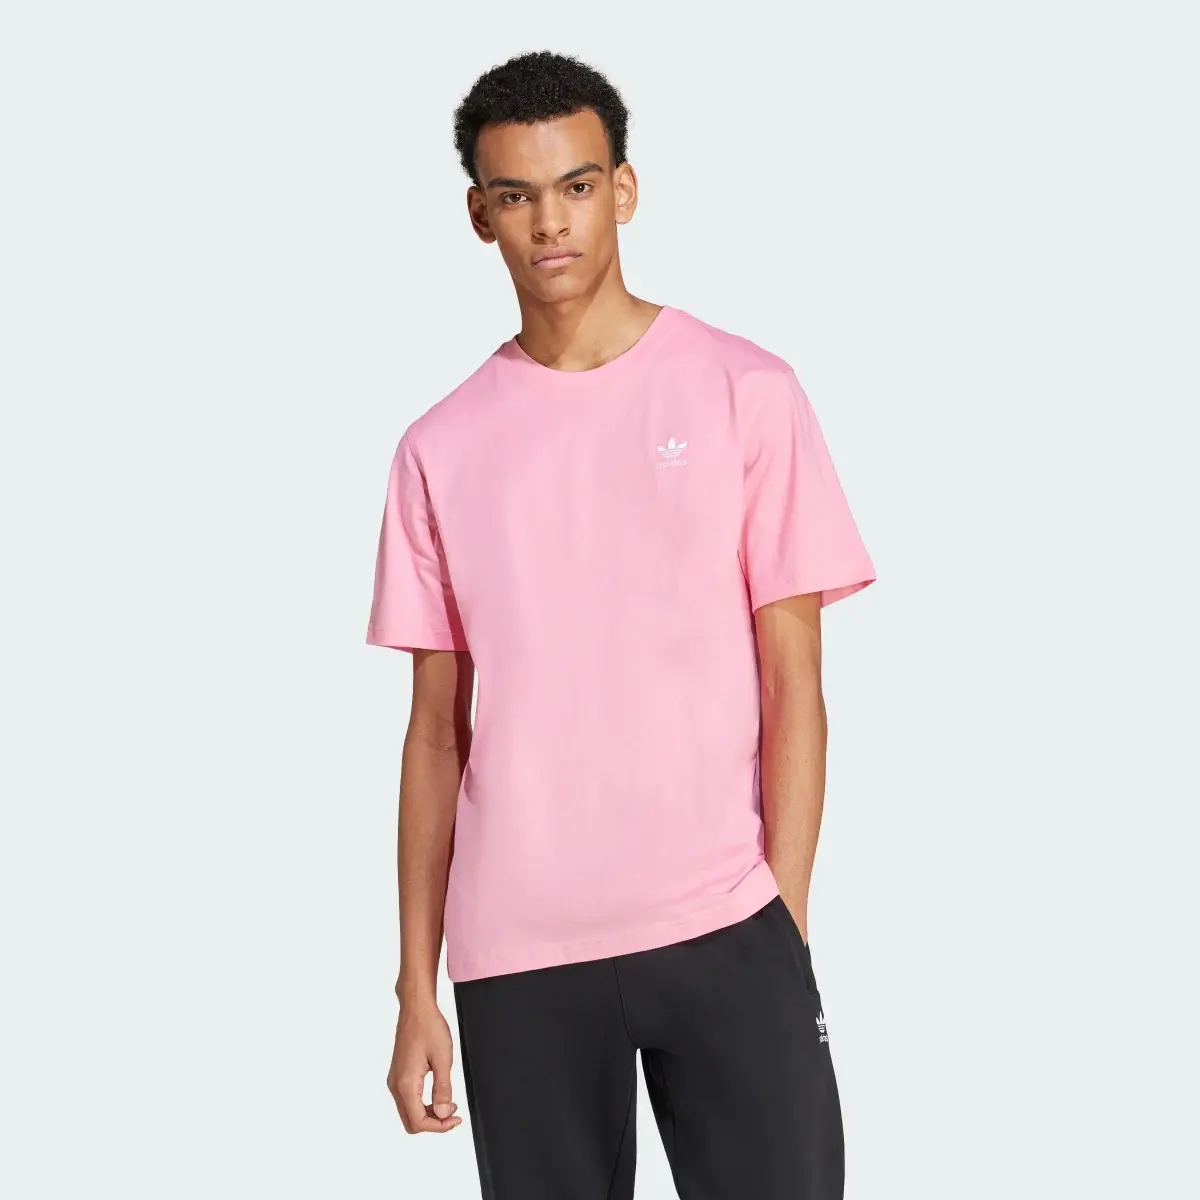 Adidas Pink T-Shirt. 2